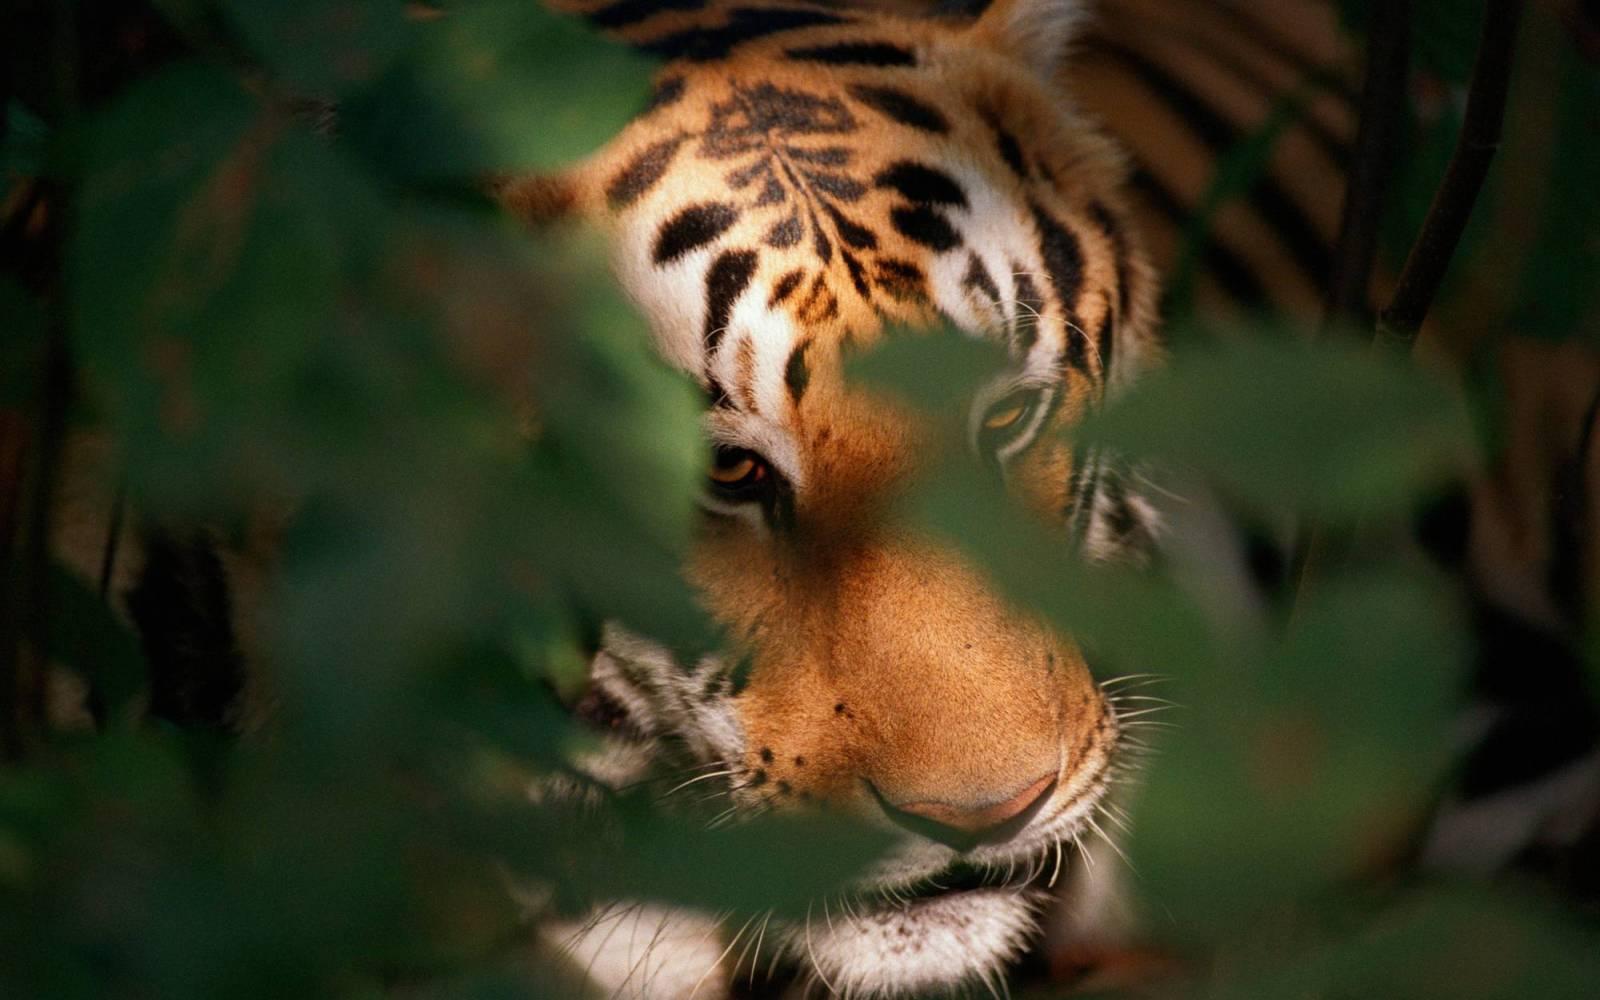 Tiger in Kanha National Park, India